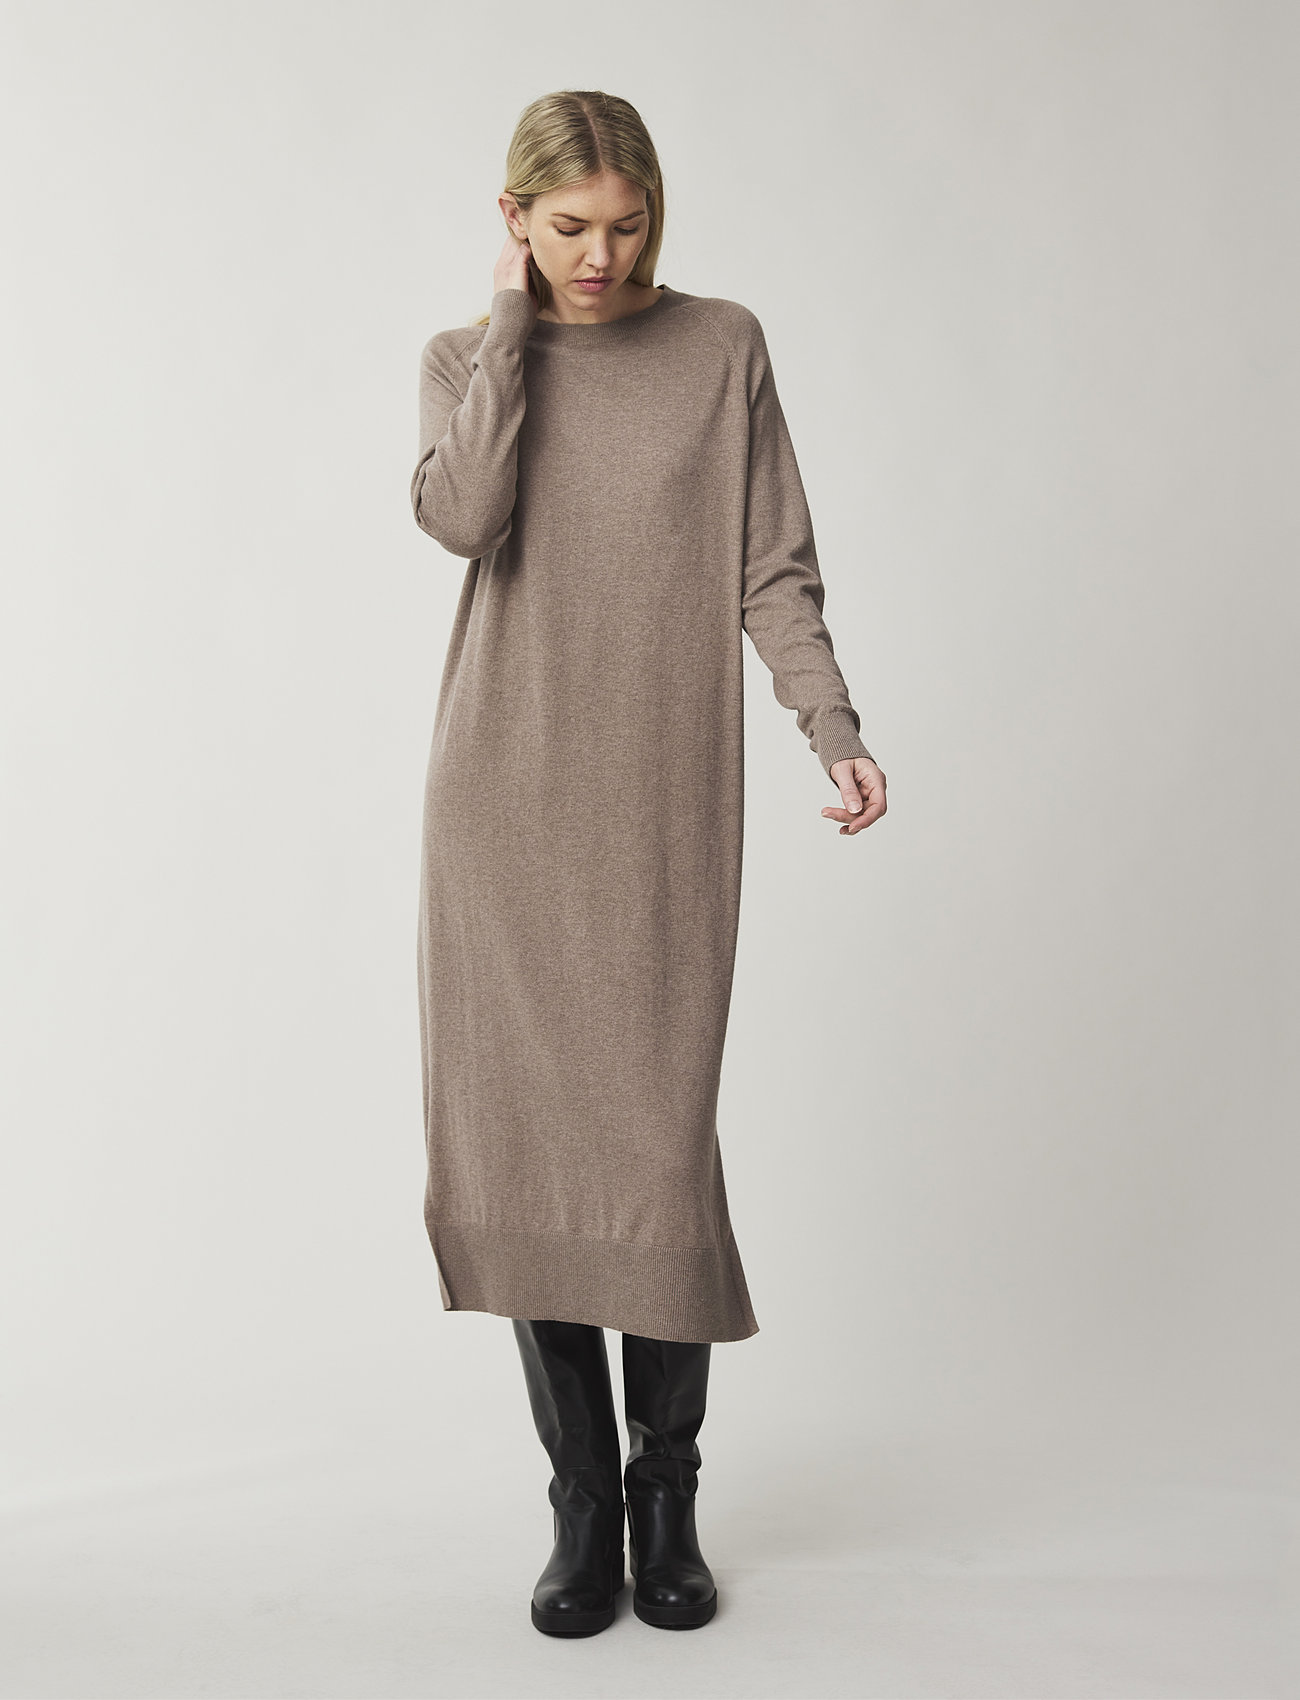 Lexington Clothing - Ivana Cotton/Cashmere Knitted Dress - strickkleider - light brown melange - 1